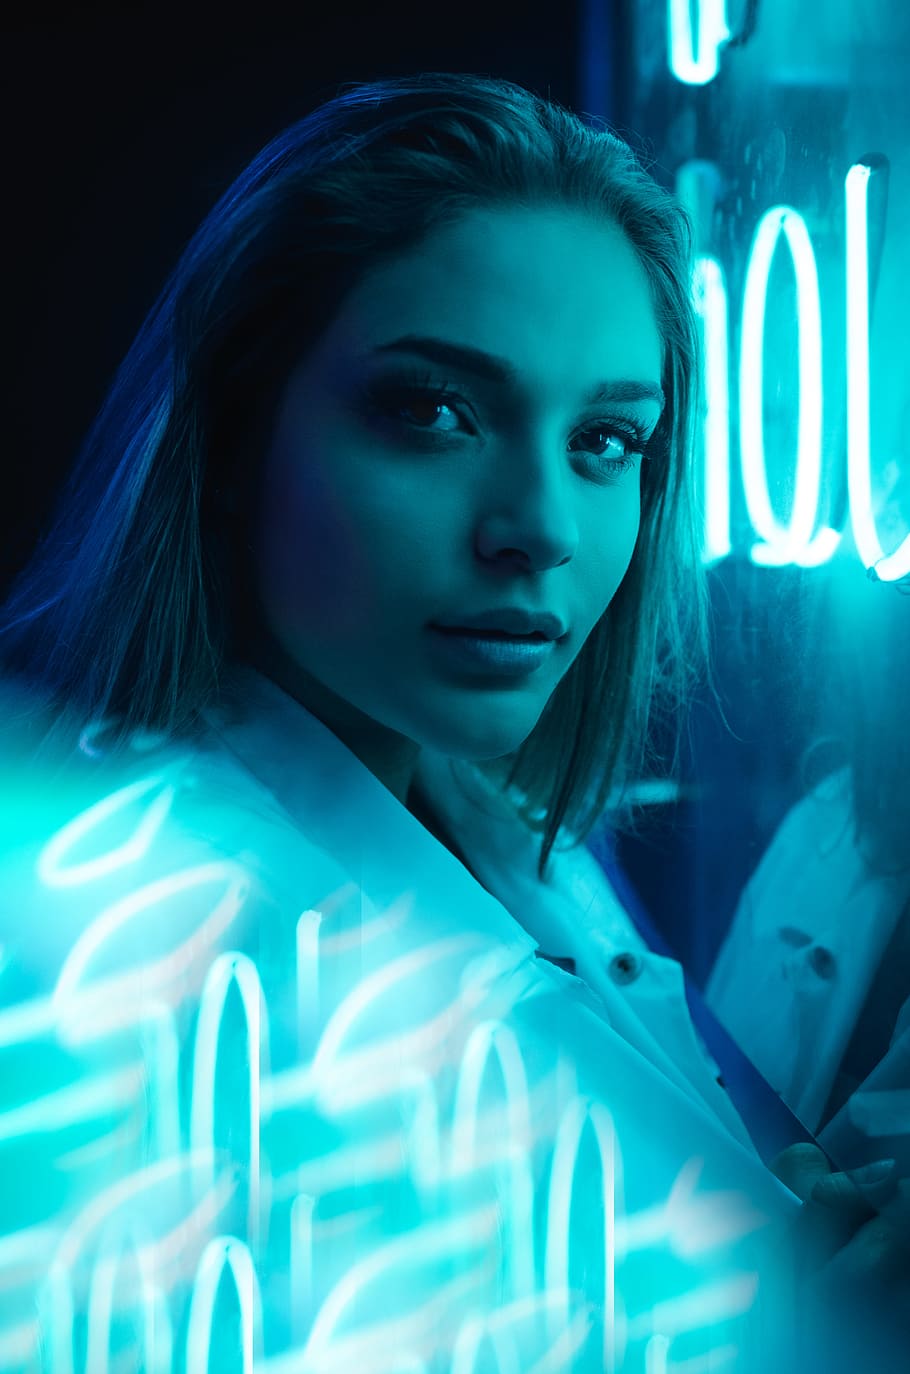 closeup photo of woman near neon light signage, portrait, blur